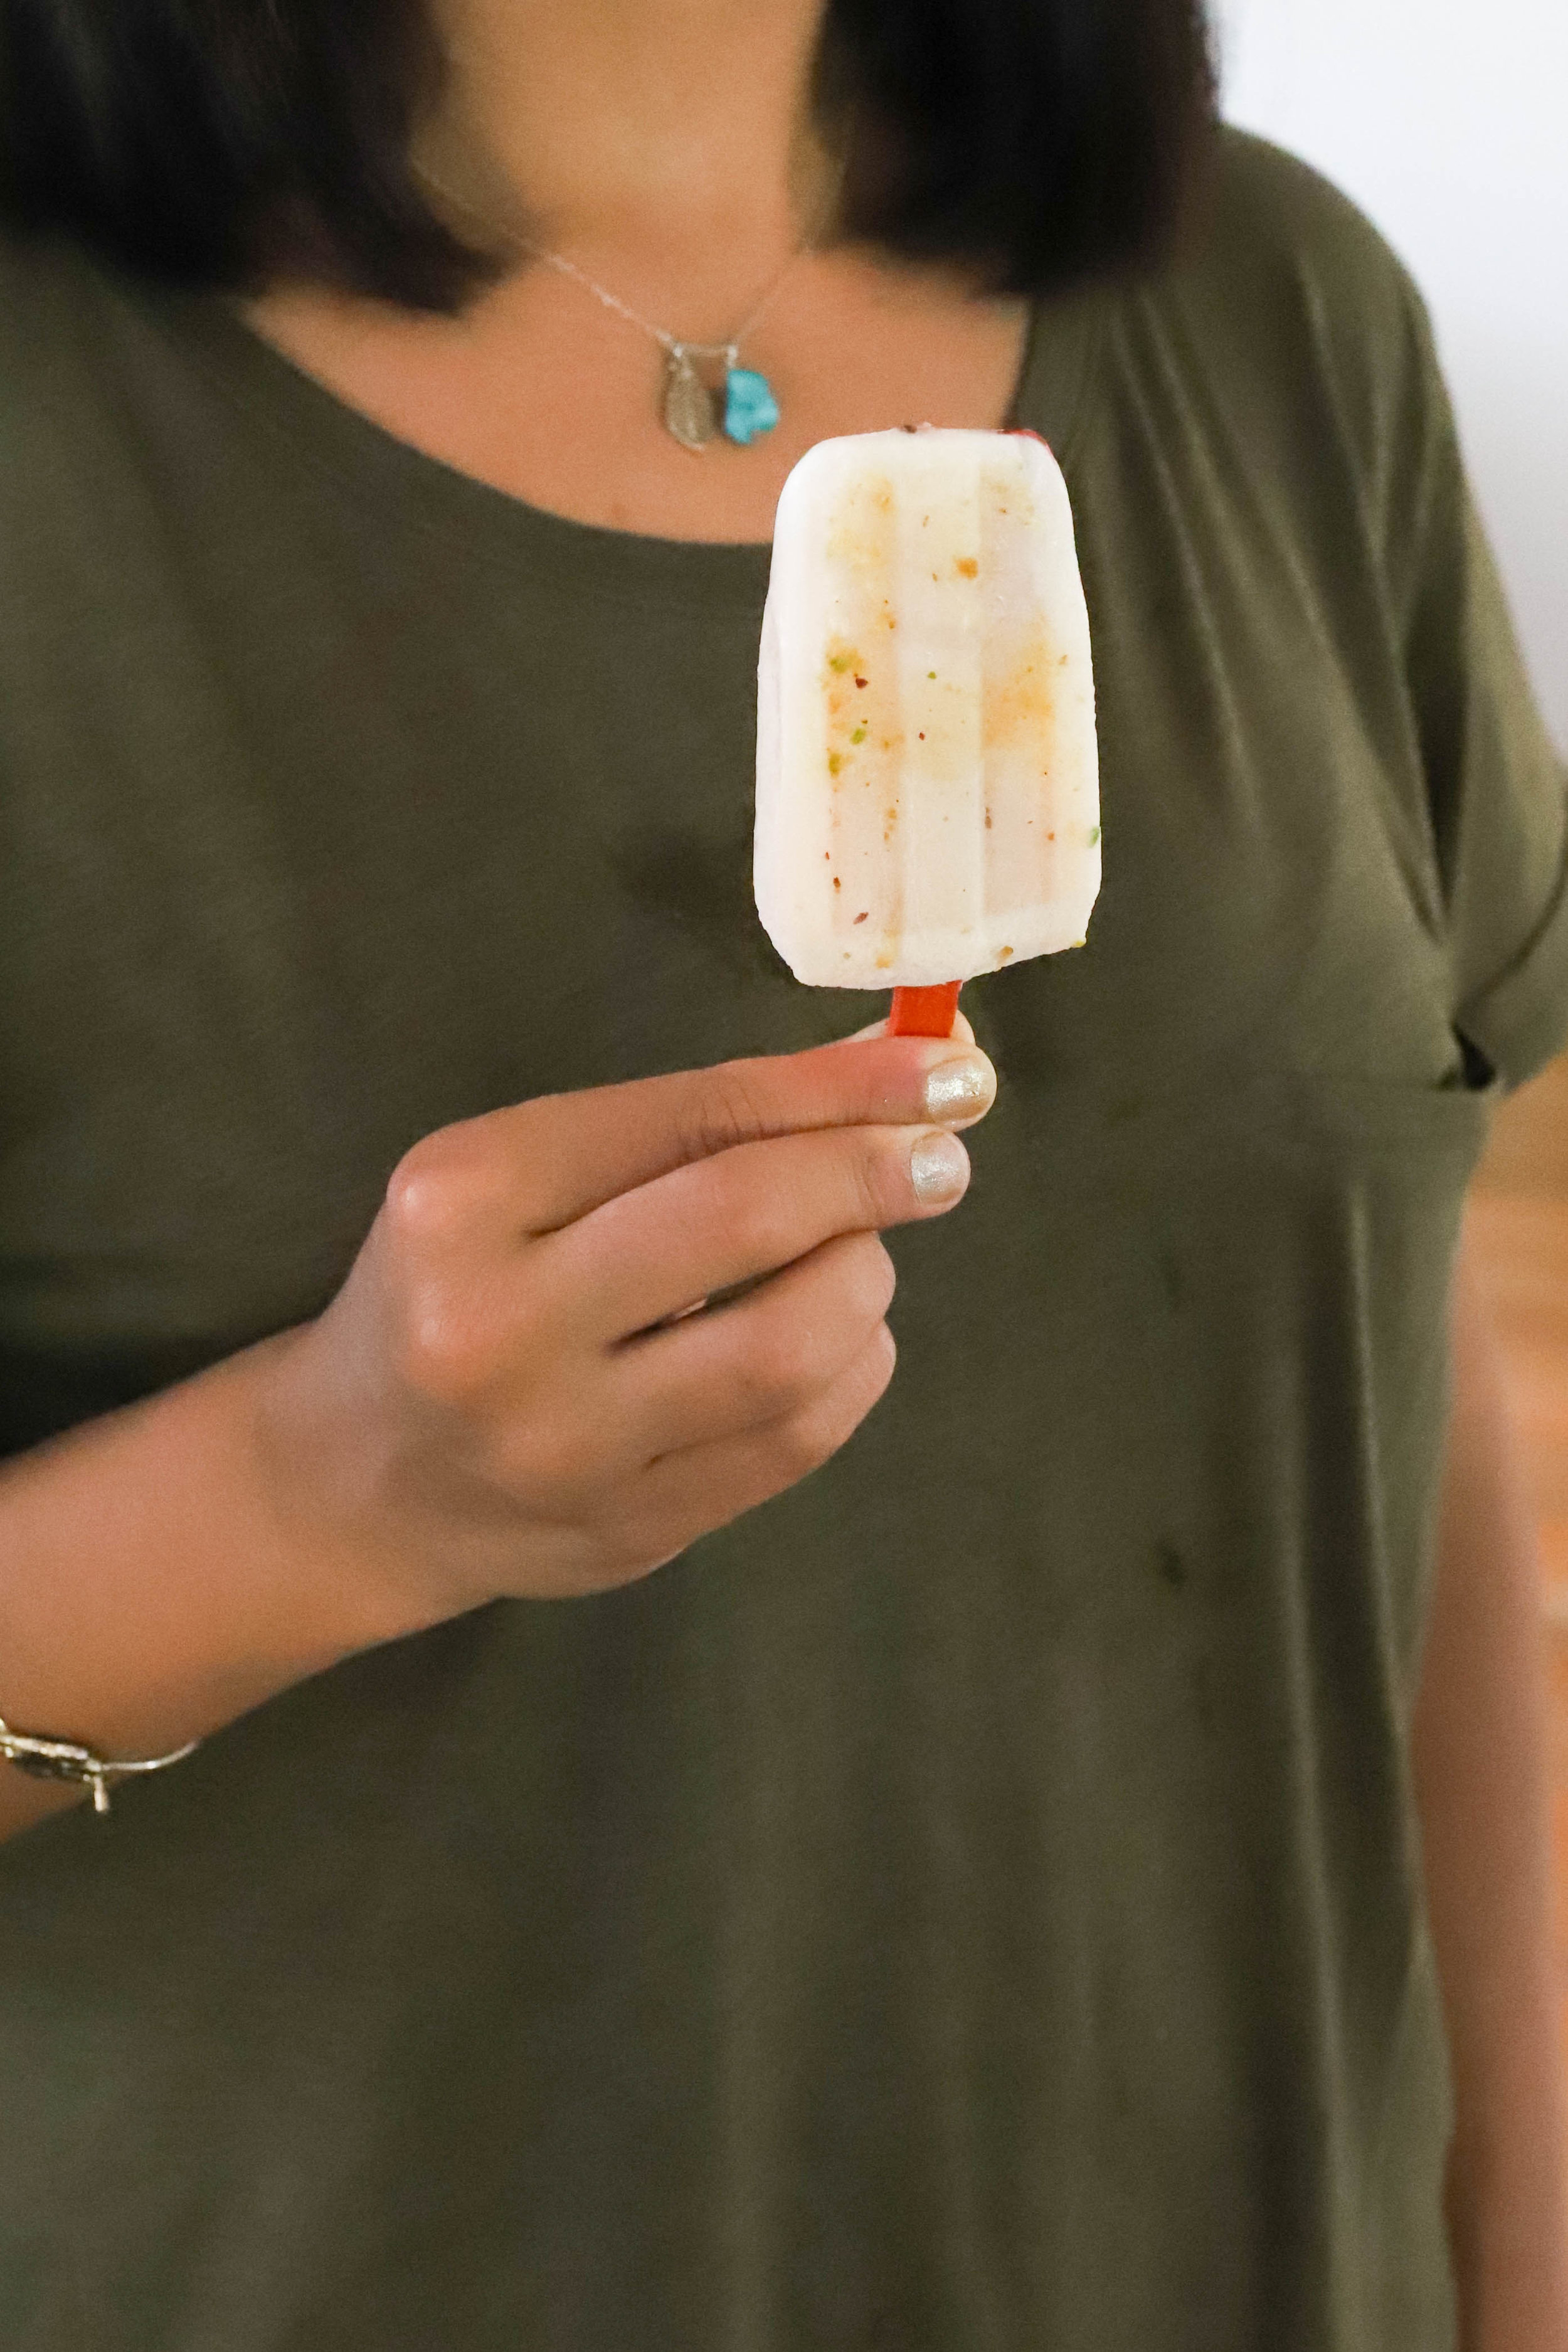 5 Popsicles You Should Make Before Summer Ends